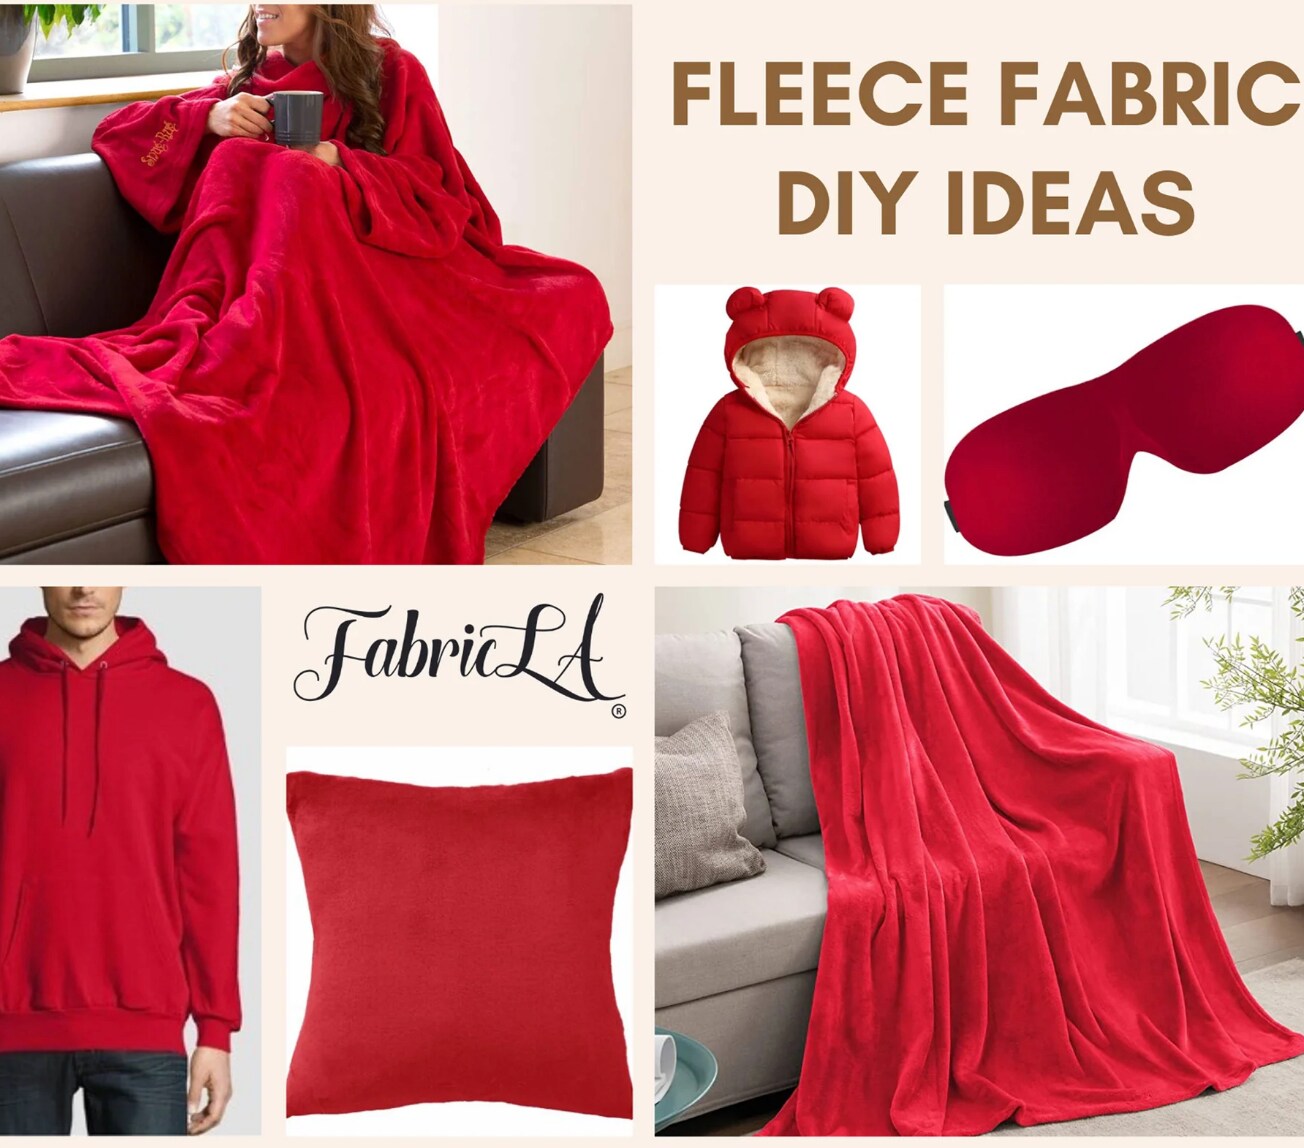 FabricLA | Fleece Fabric By The Yard | 72&#x22;X60&#x22; Inch Wide | Anti Pill Polar Fleece | Soft, Blanket, Throw, Poncho, Pillow Cover, PJ Pants, Booties, Eye Mask - Plaid Red (2 Yard)